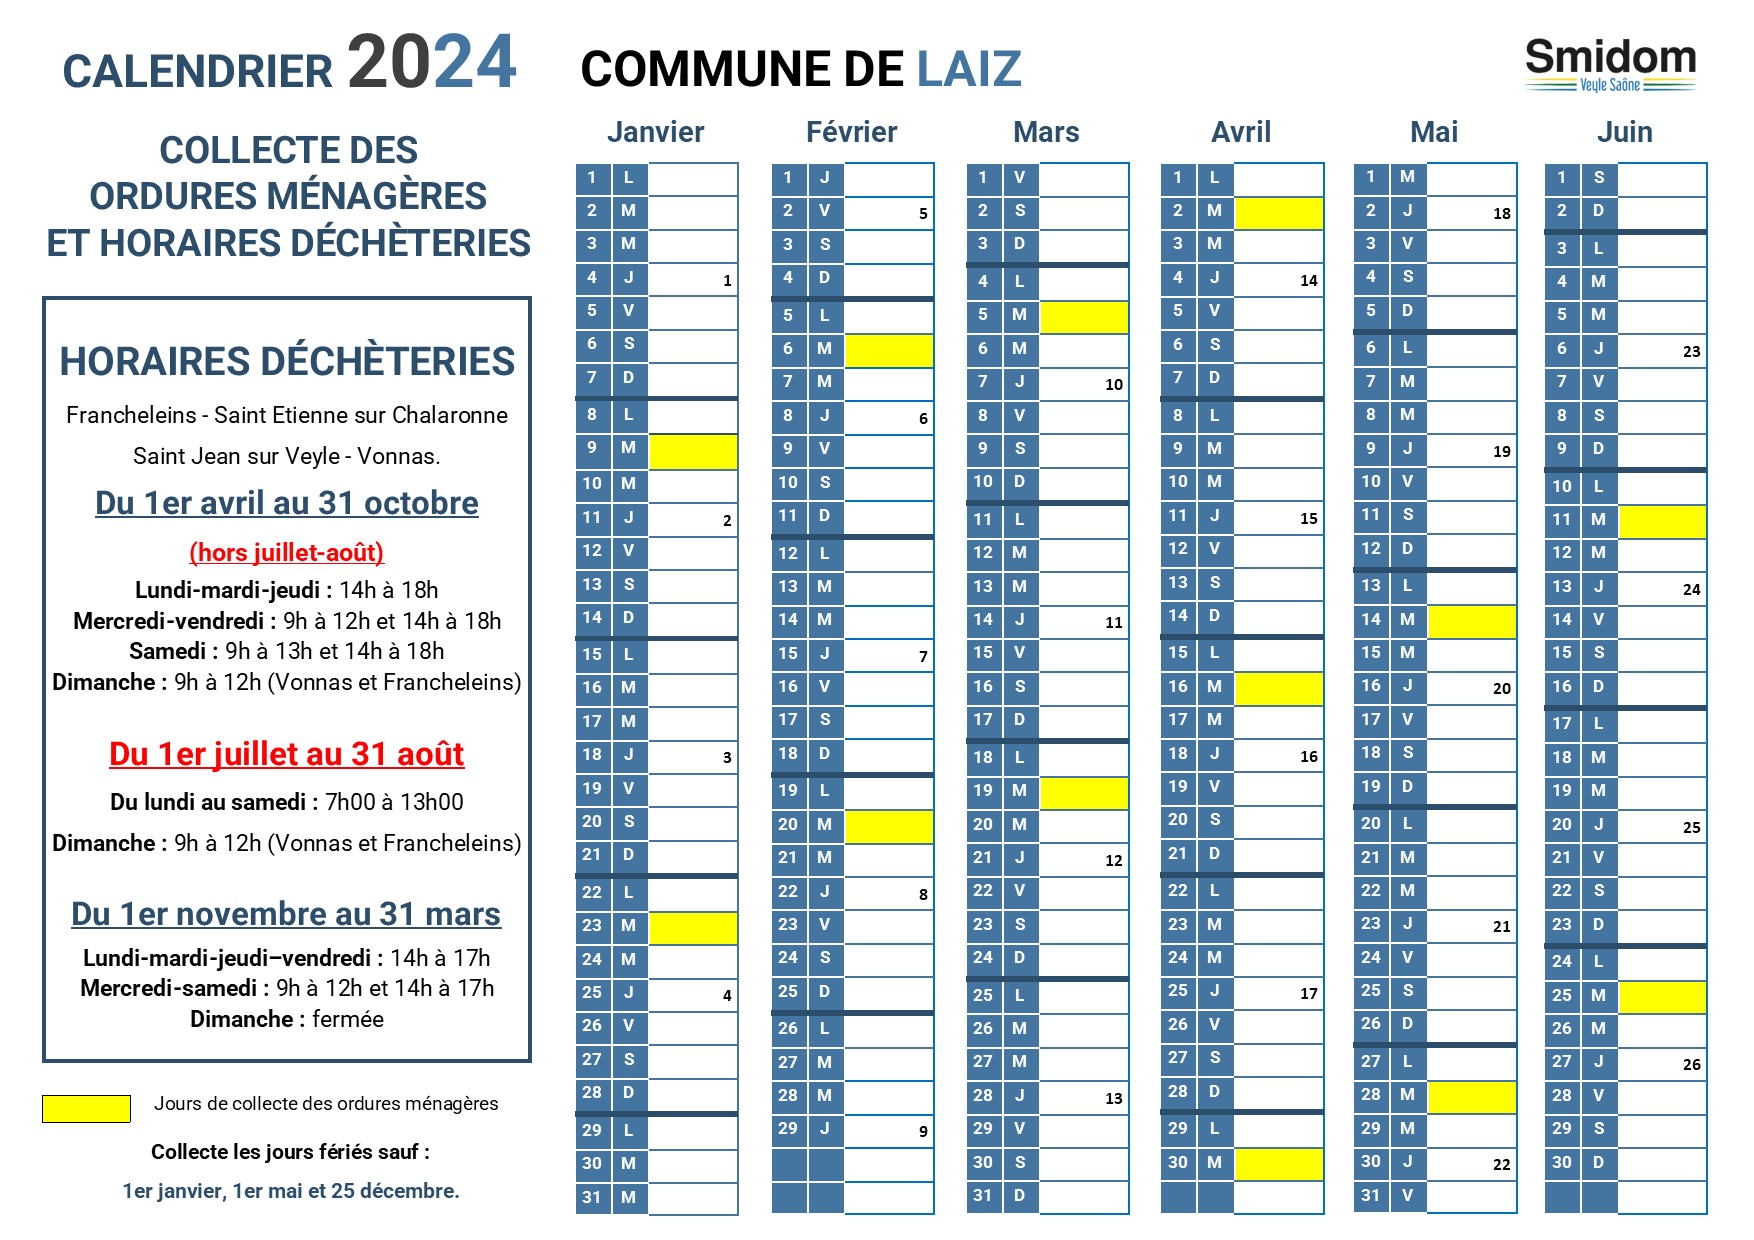 LAIZ - Calendrier 2024.jpg